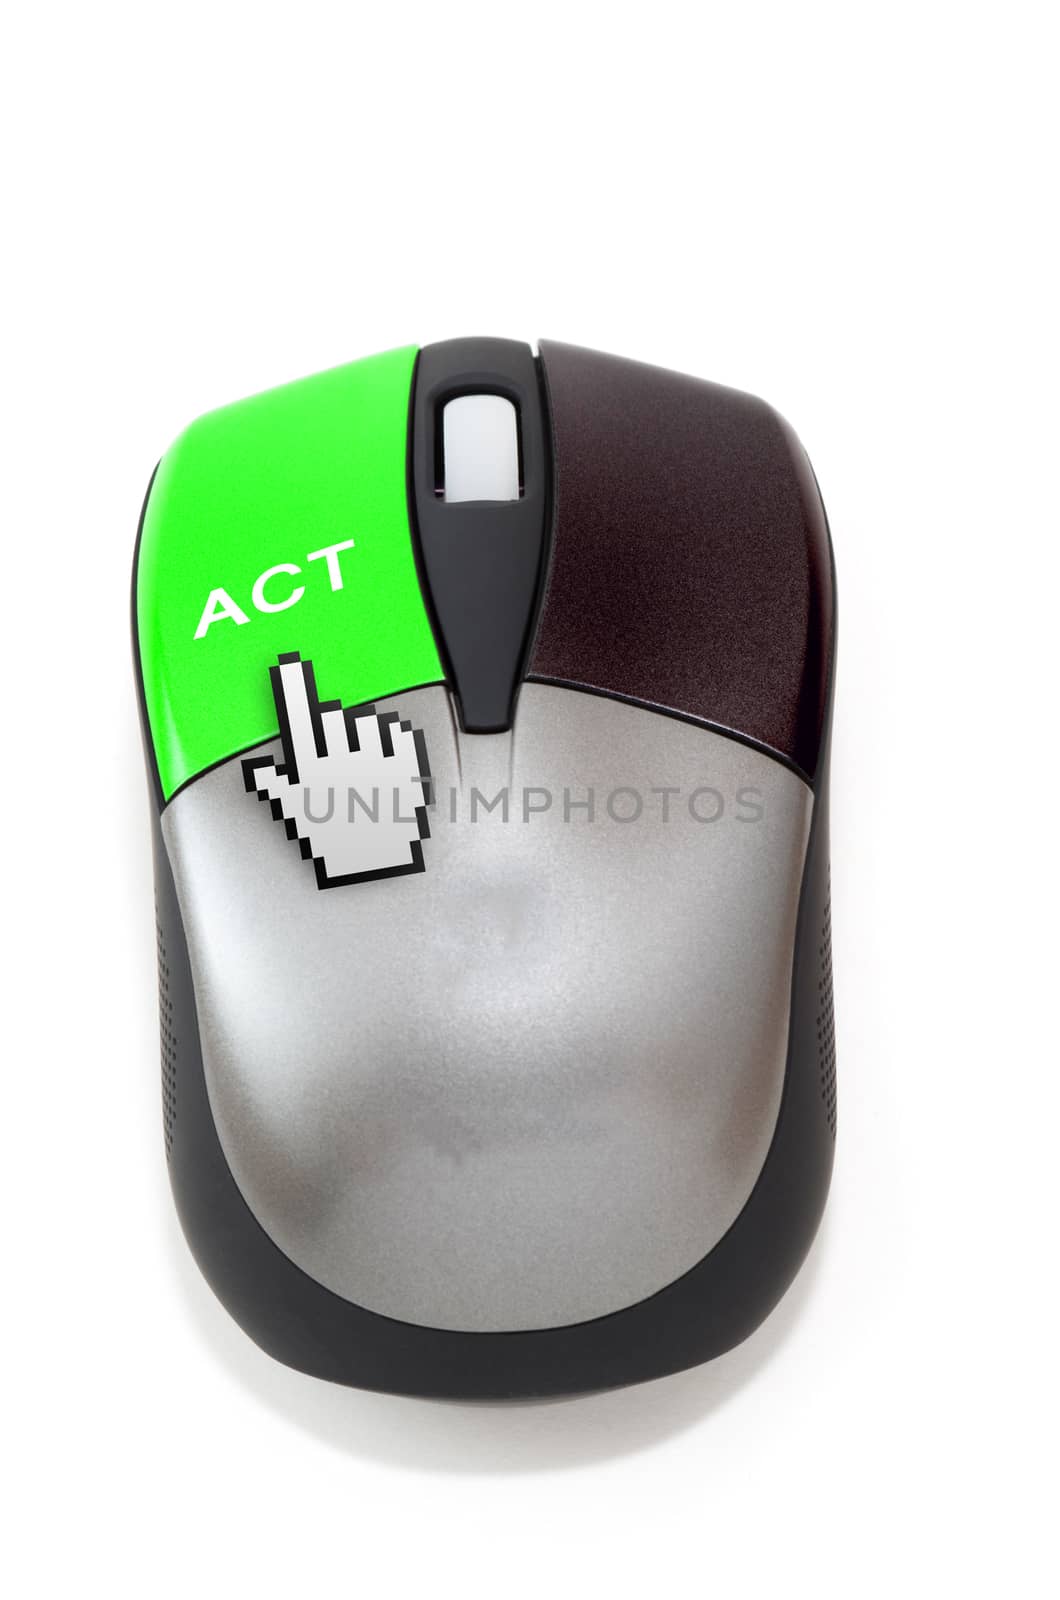 Hand cursor clicking on act button